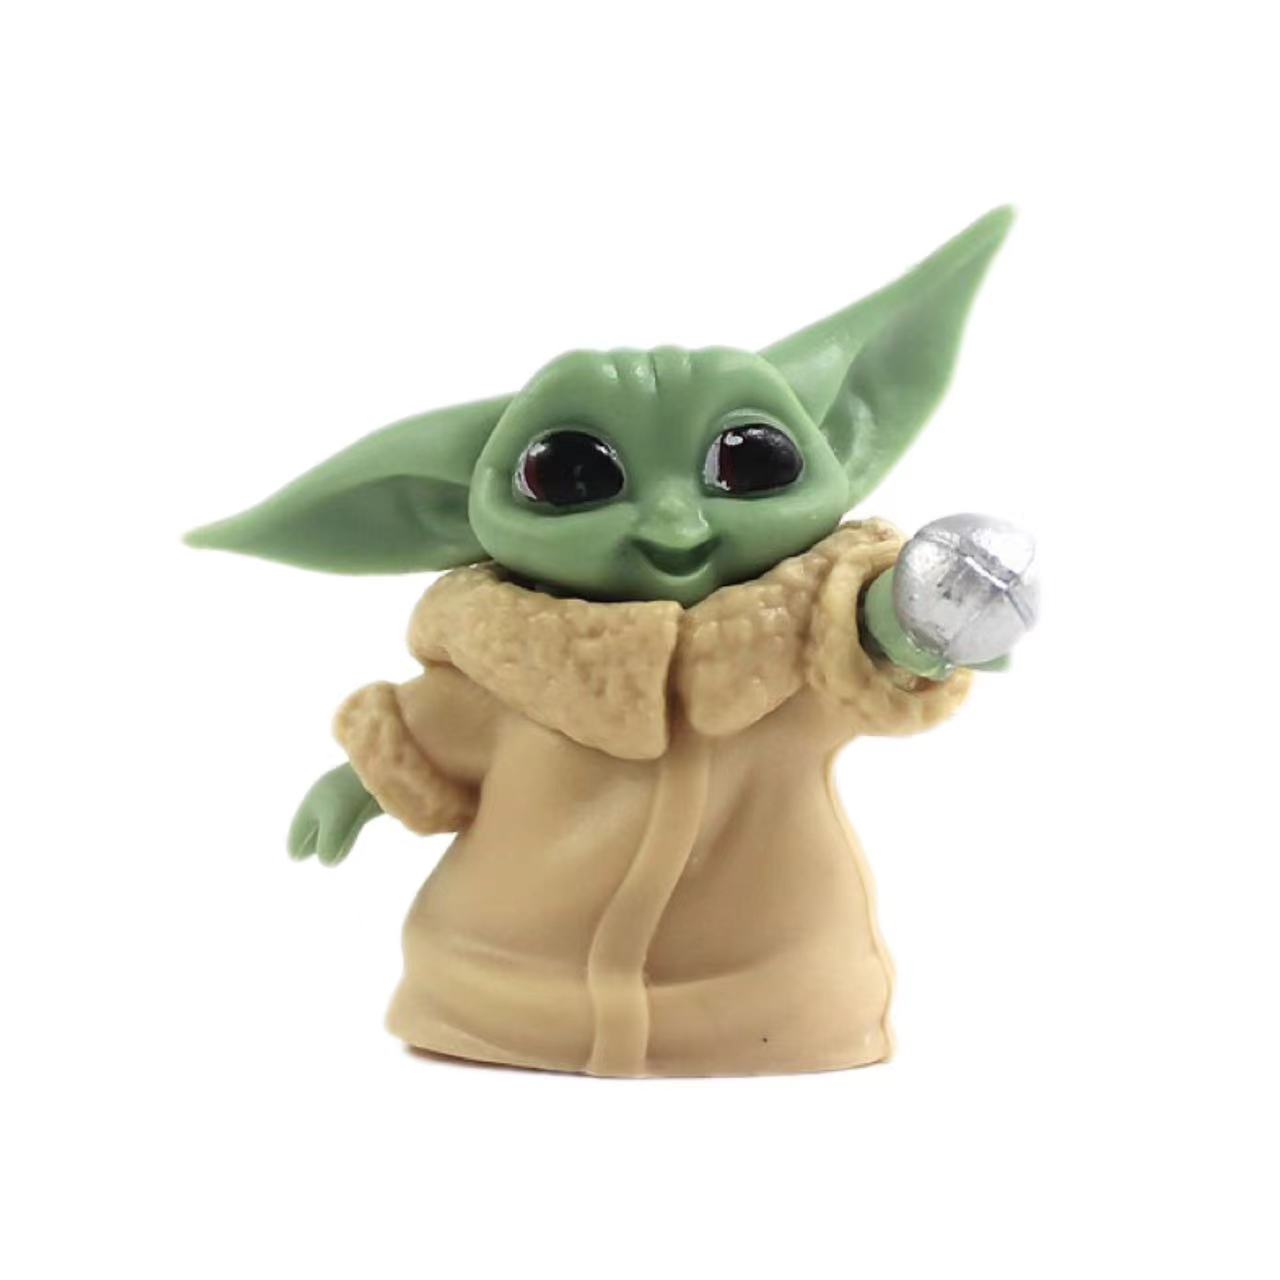 Pack 6 Mini Figuras Baby Yoda 5-6cm